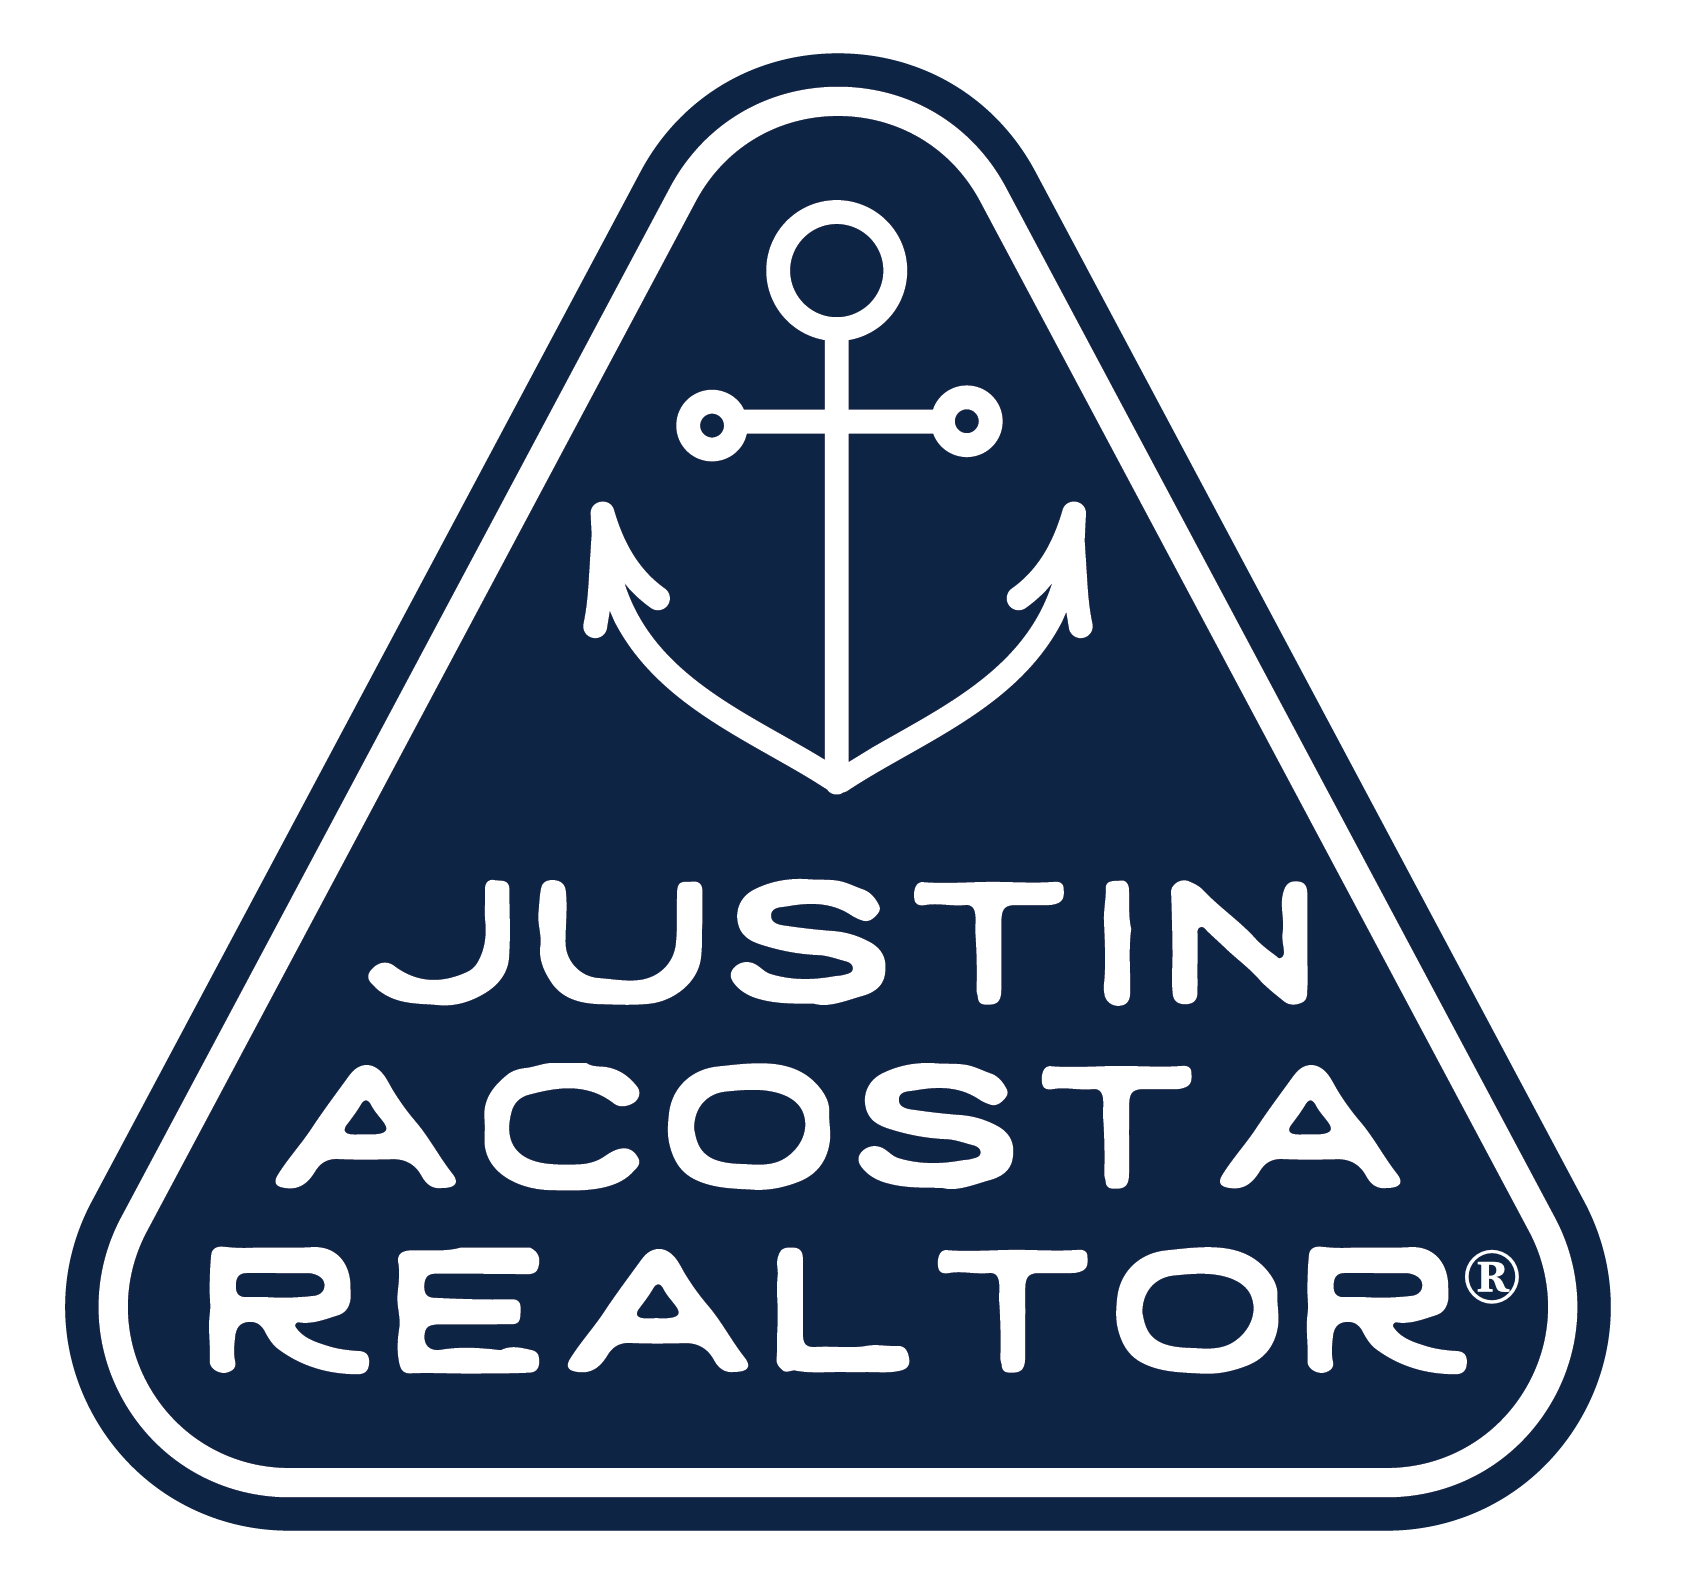 Justin Acosta Realtor Logo 2 Final-01.png